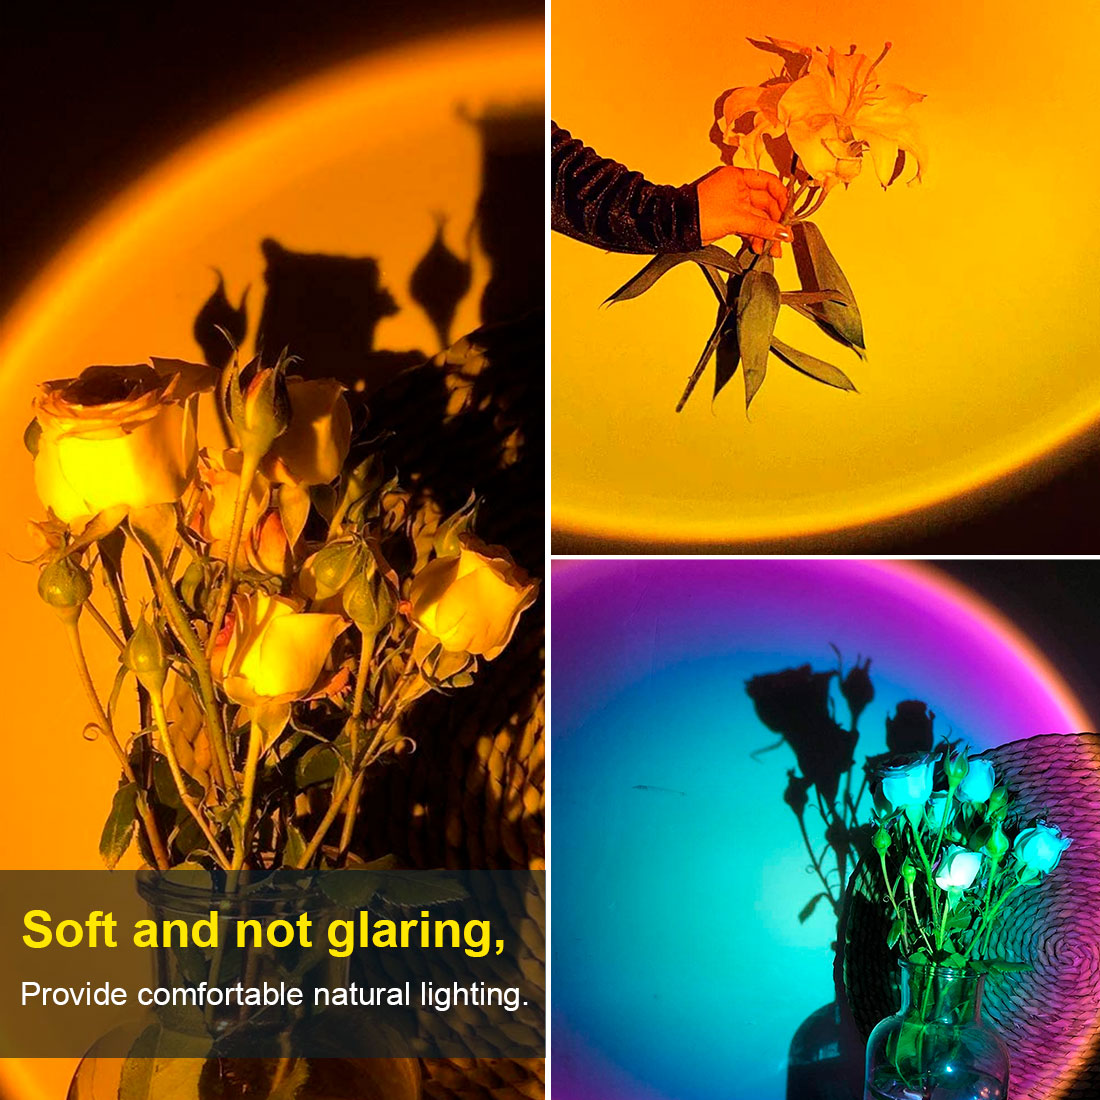 USB-Sunset-Projection-Lamp-Aesthetic-Table-Lamp-Anti-glare-LED-Night-Light-Romantic-Visual-Experienc-1822954-11